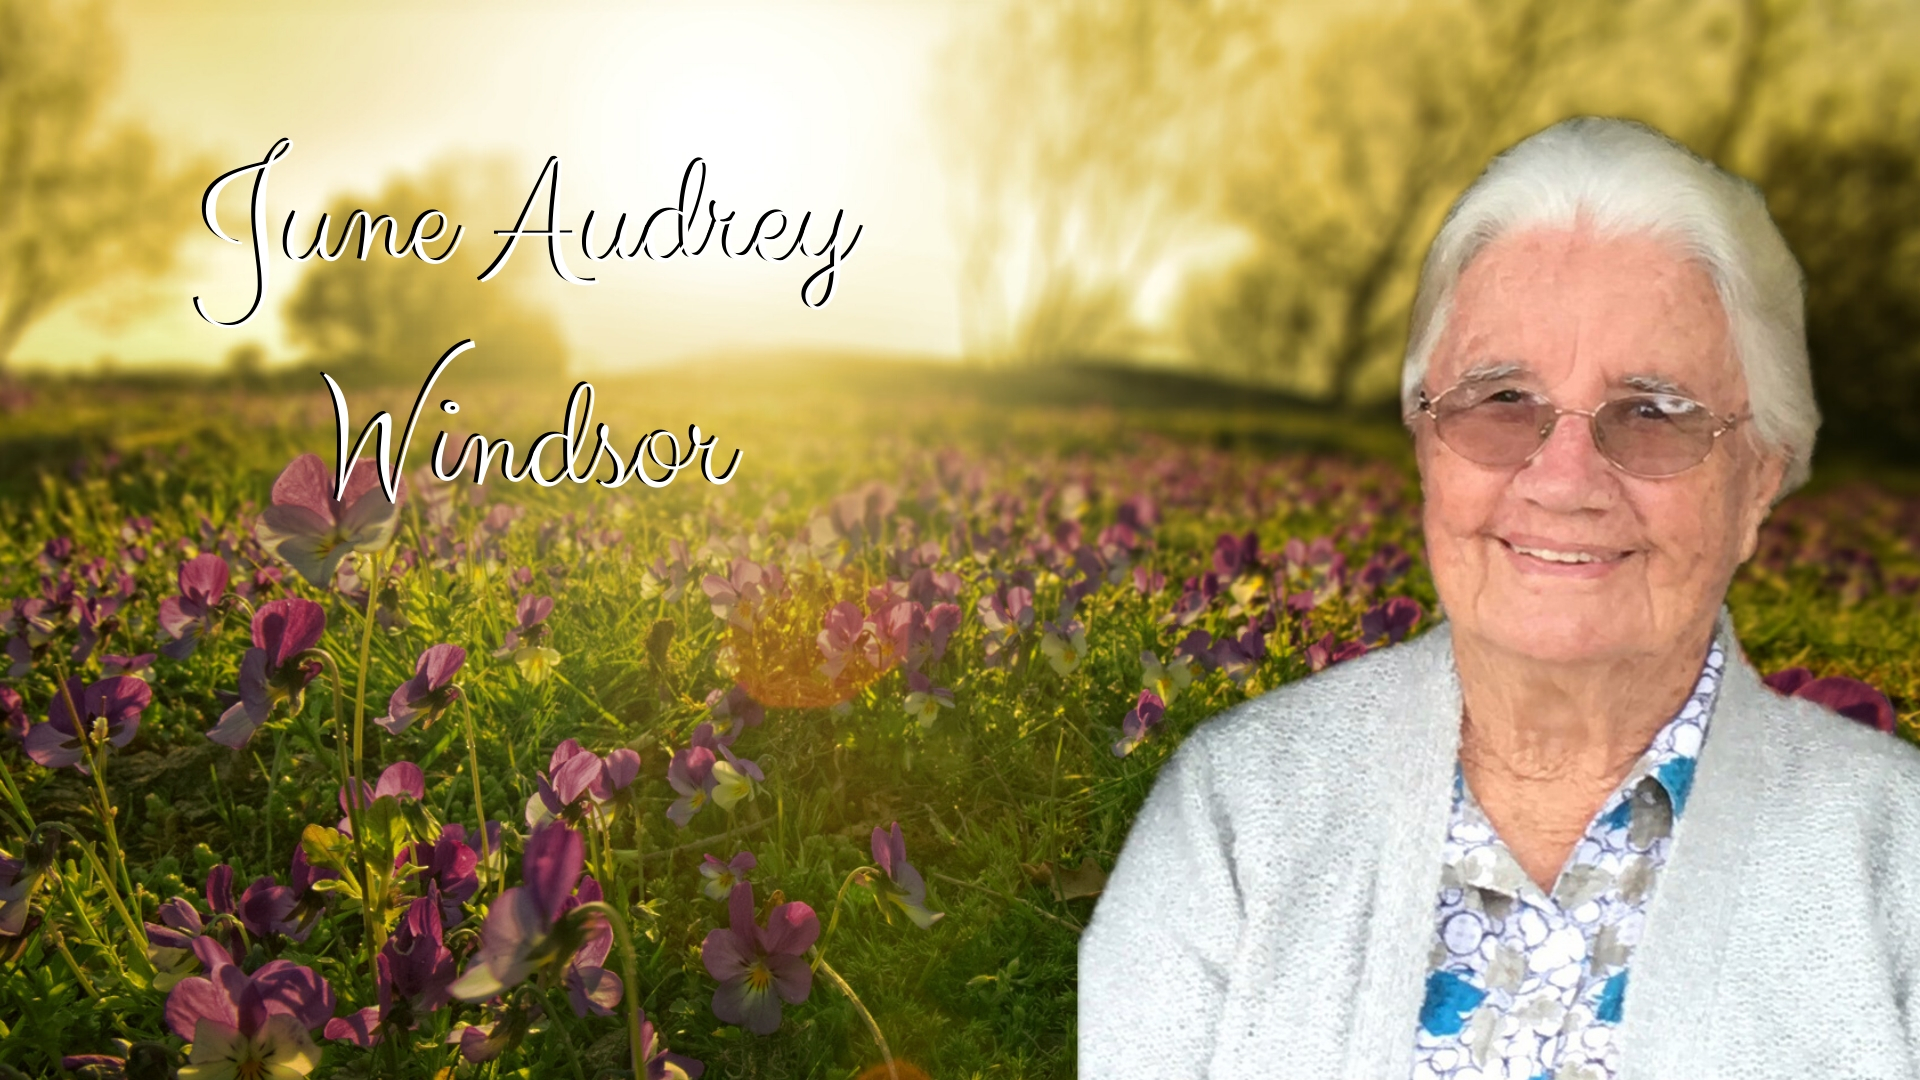 June Audrey Windsor